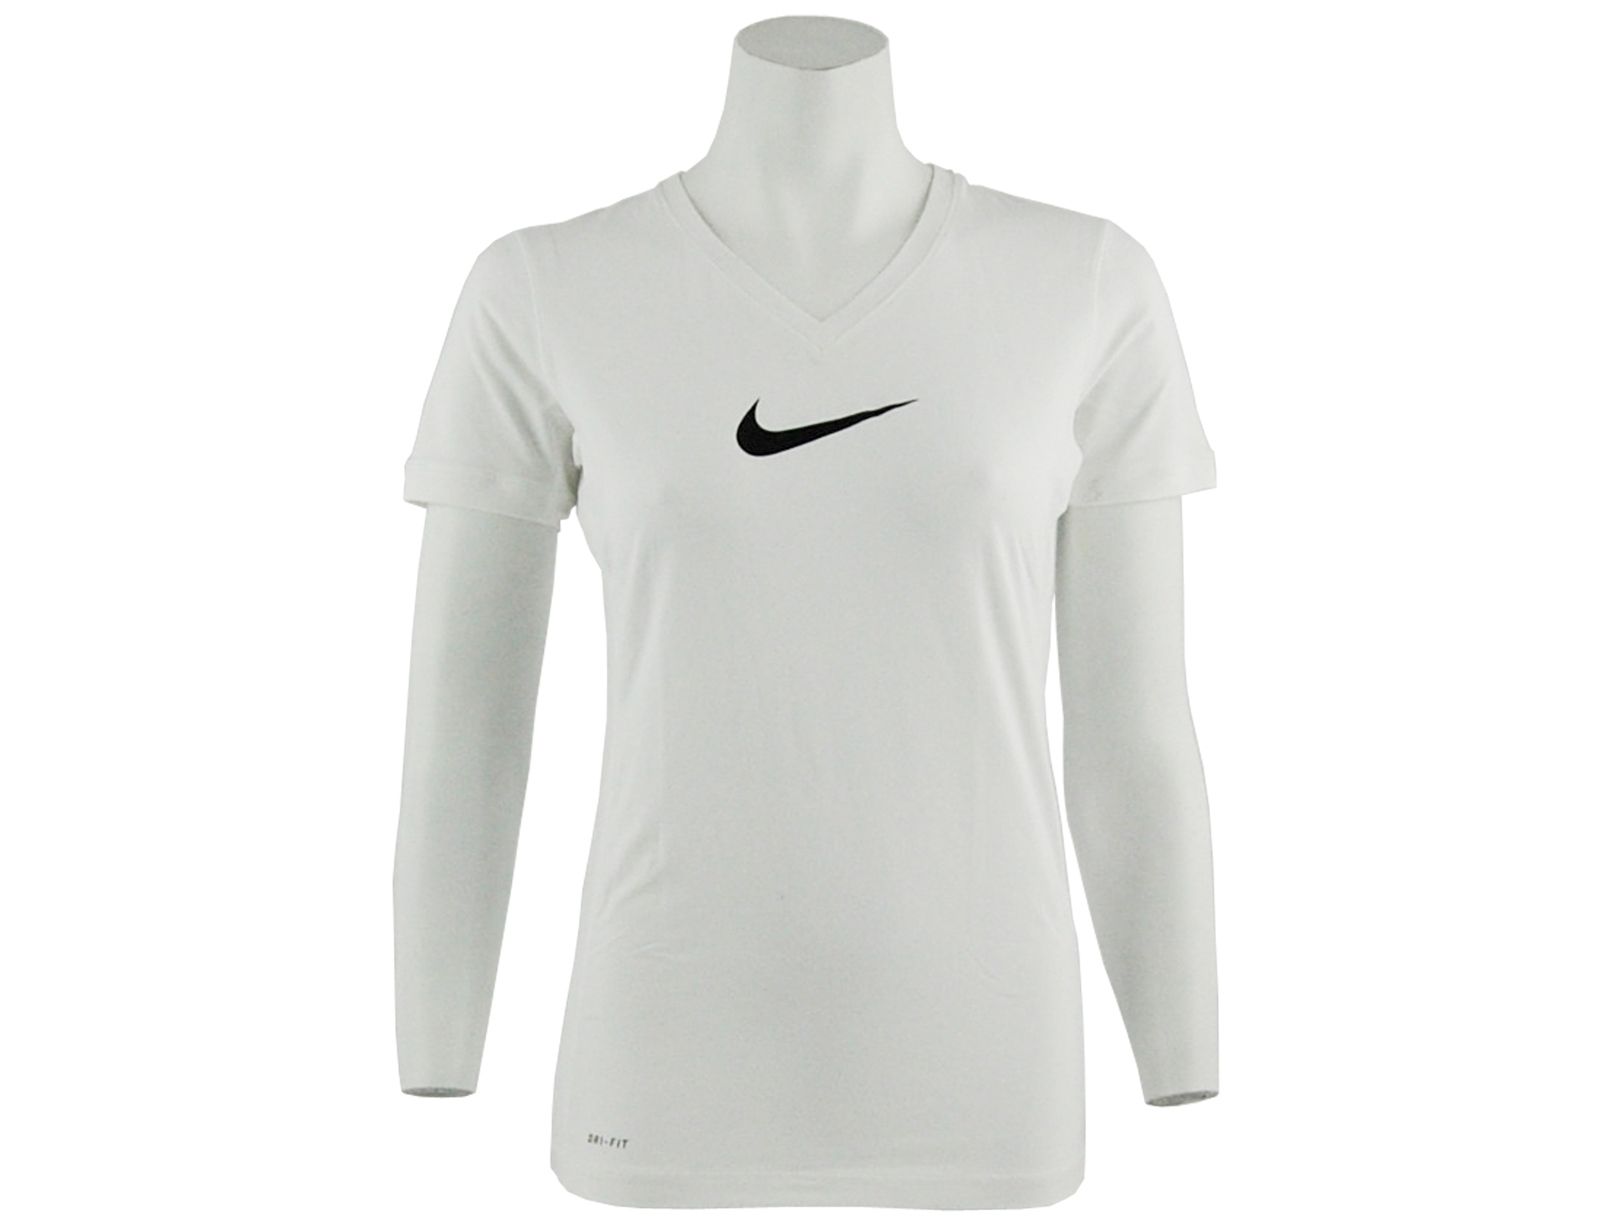 Avantisport - Nike - Legacy Short Sleeve Top - Nike Fitness T-shirt